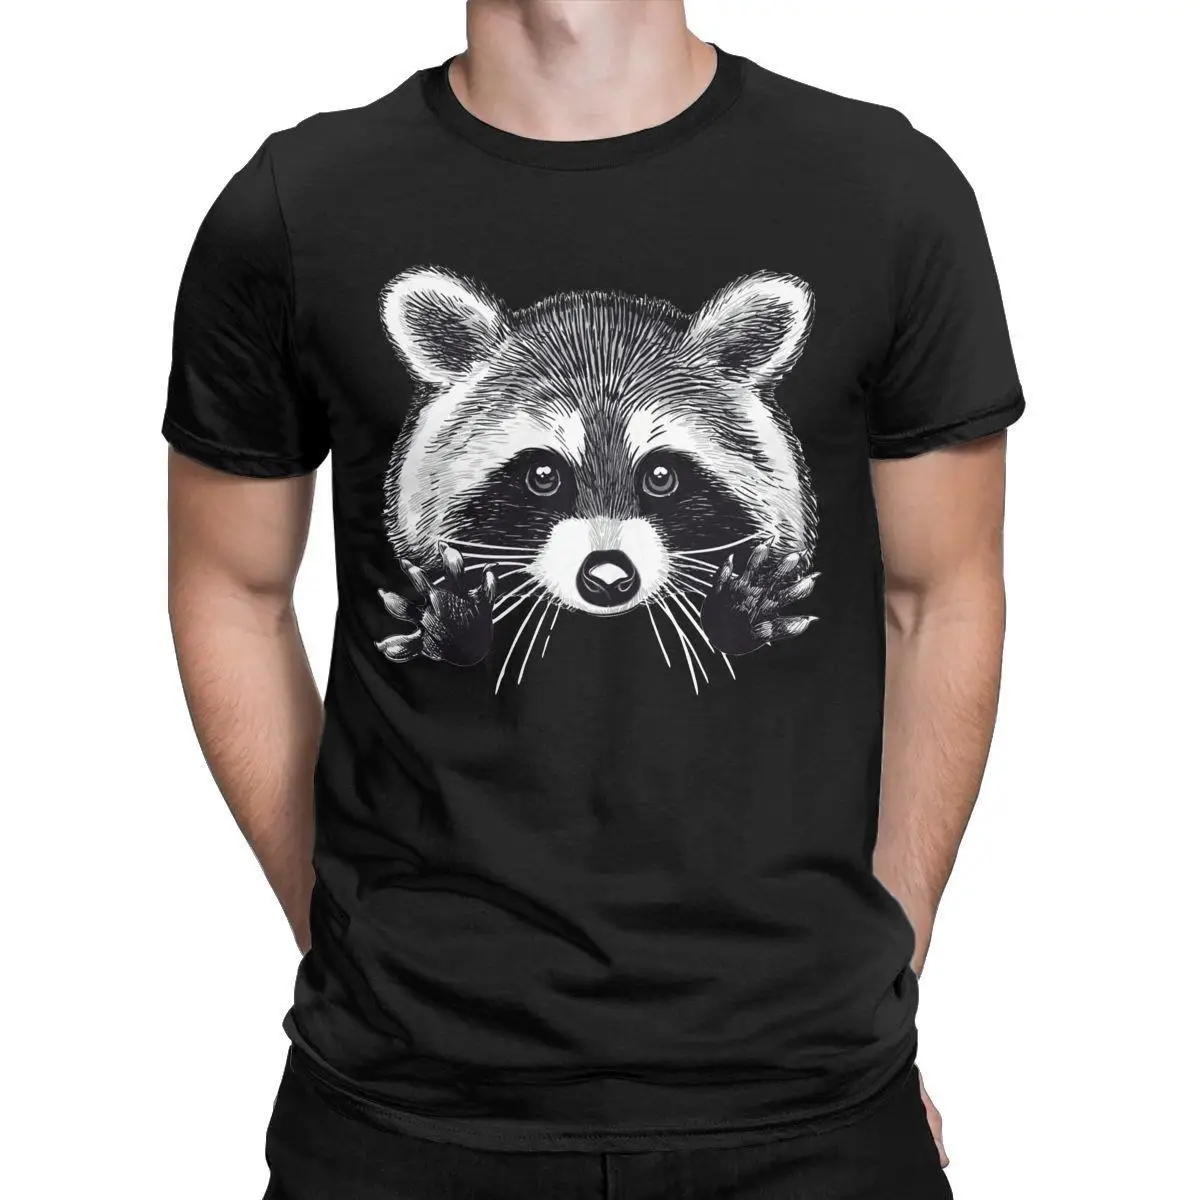 Digital Illustration Of A Little Raccoon Buddy T-Shirts Men Crewneck Pure Cotton T Shirts Short Sleeve Tee Shirt Plus Size